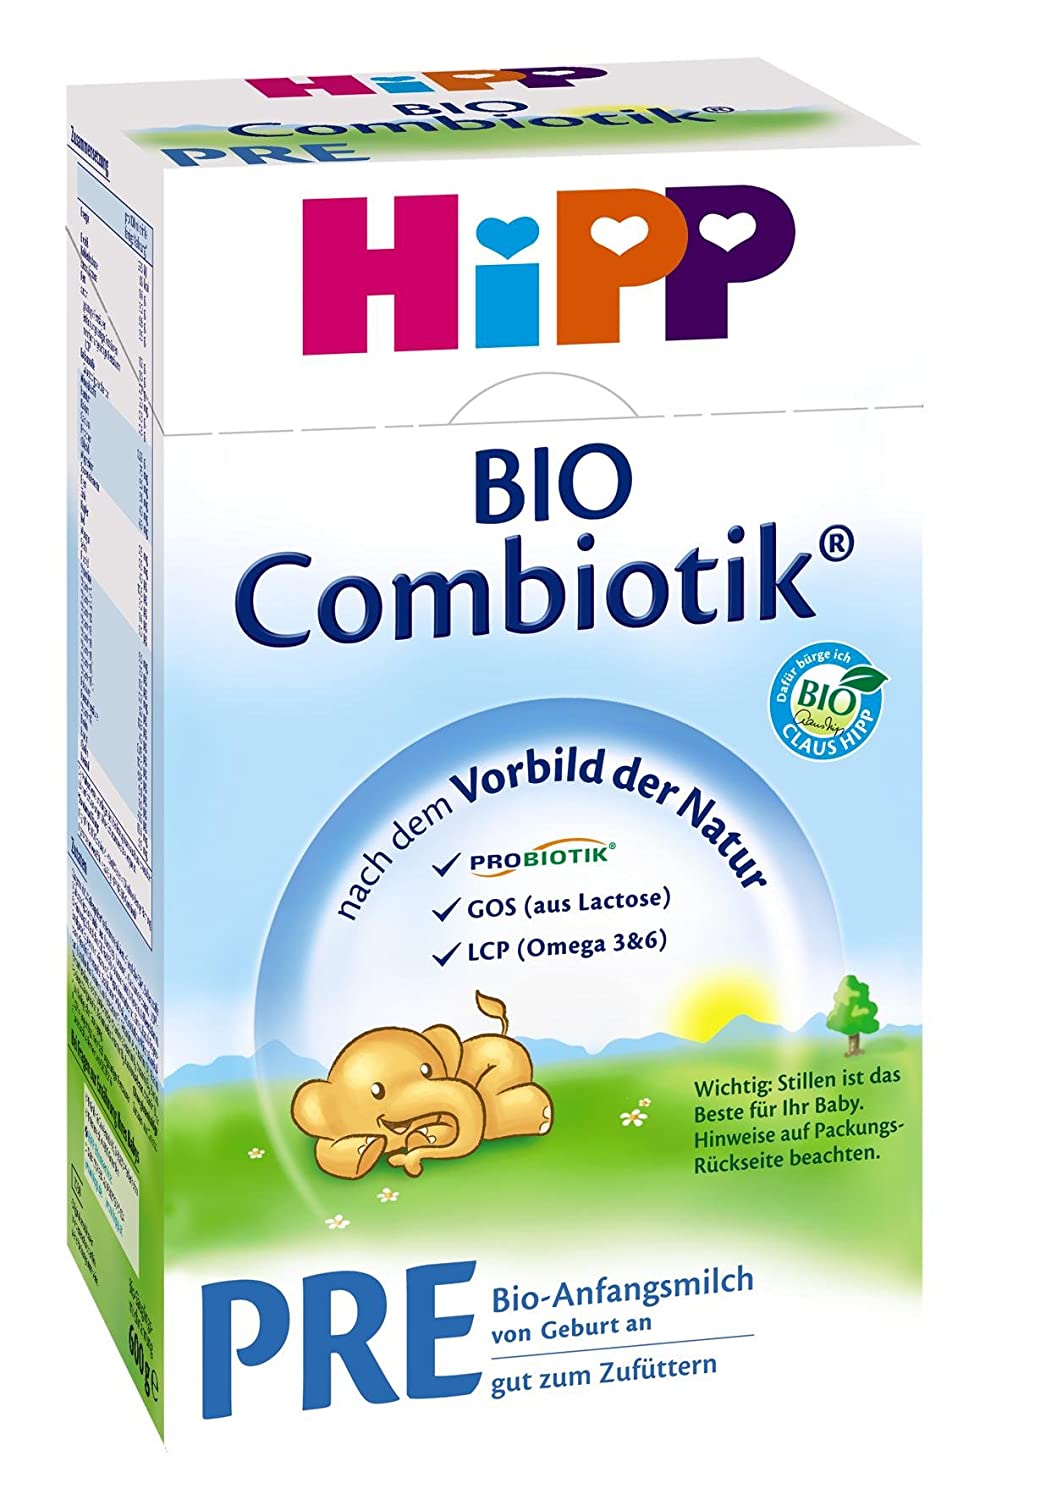 Hipp Bio Combiotik Pre, 12er Pack (12 x 600g)